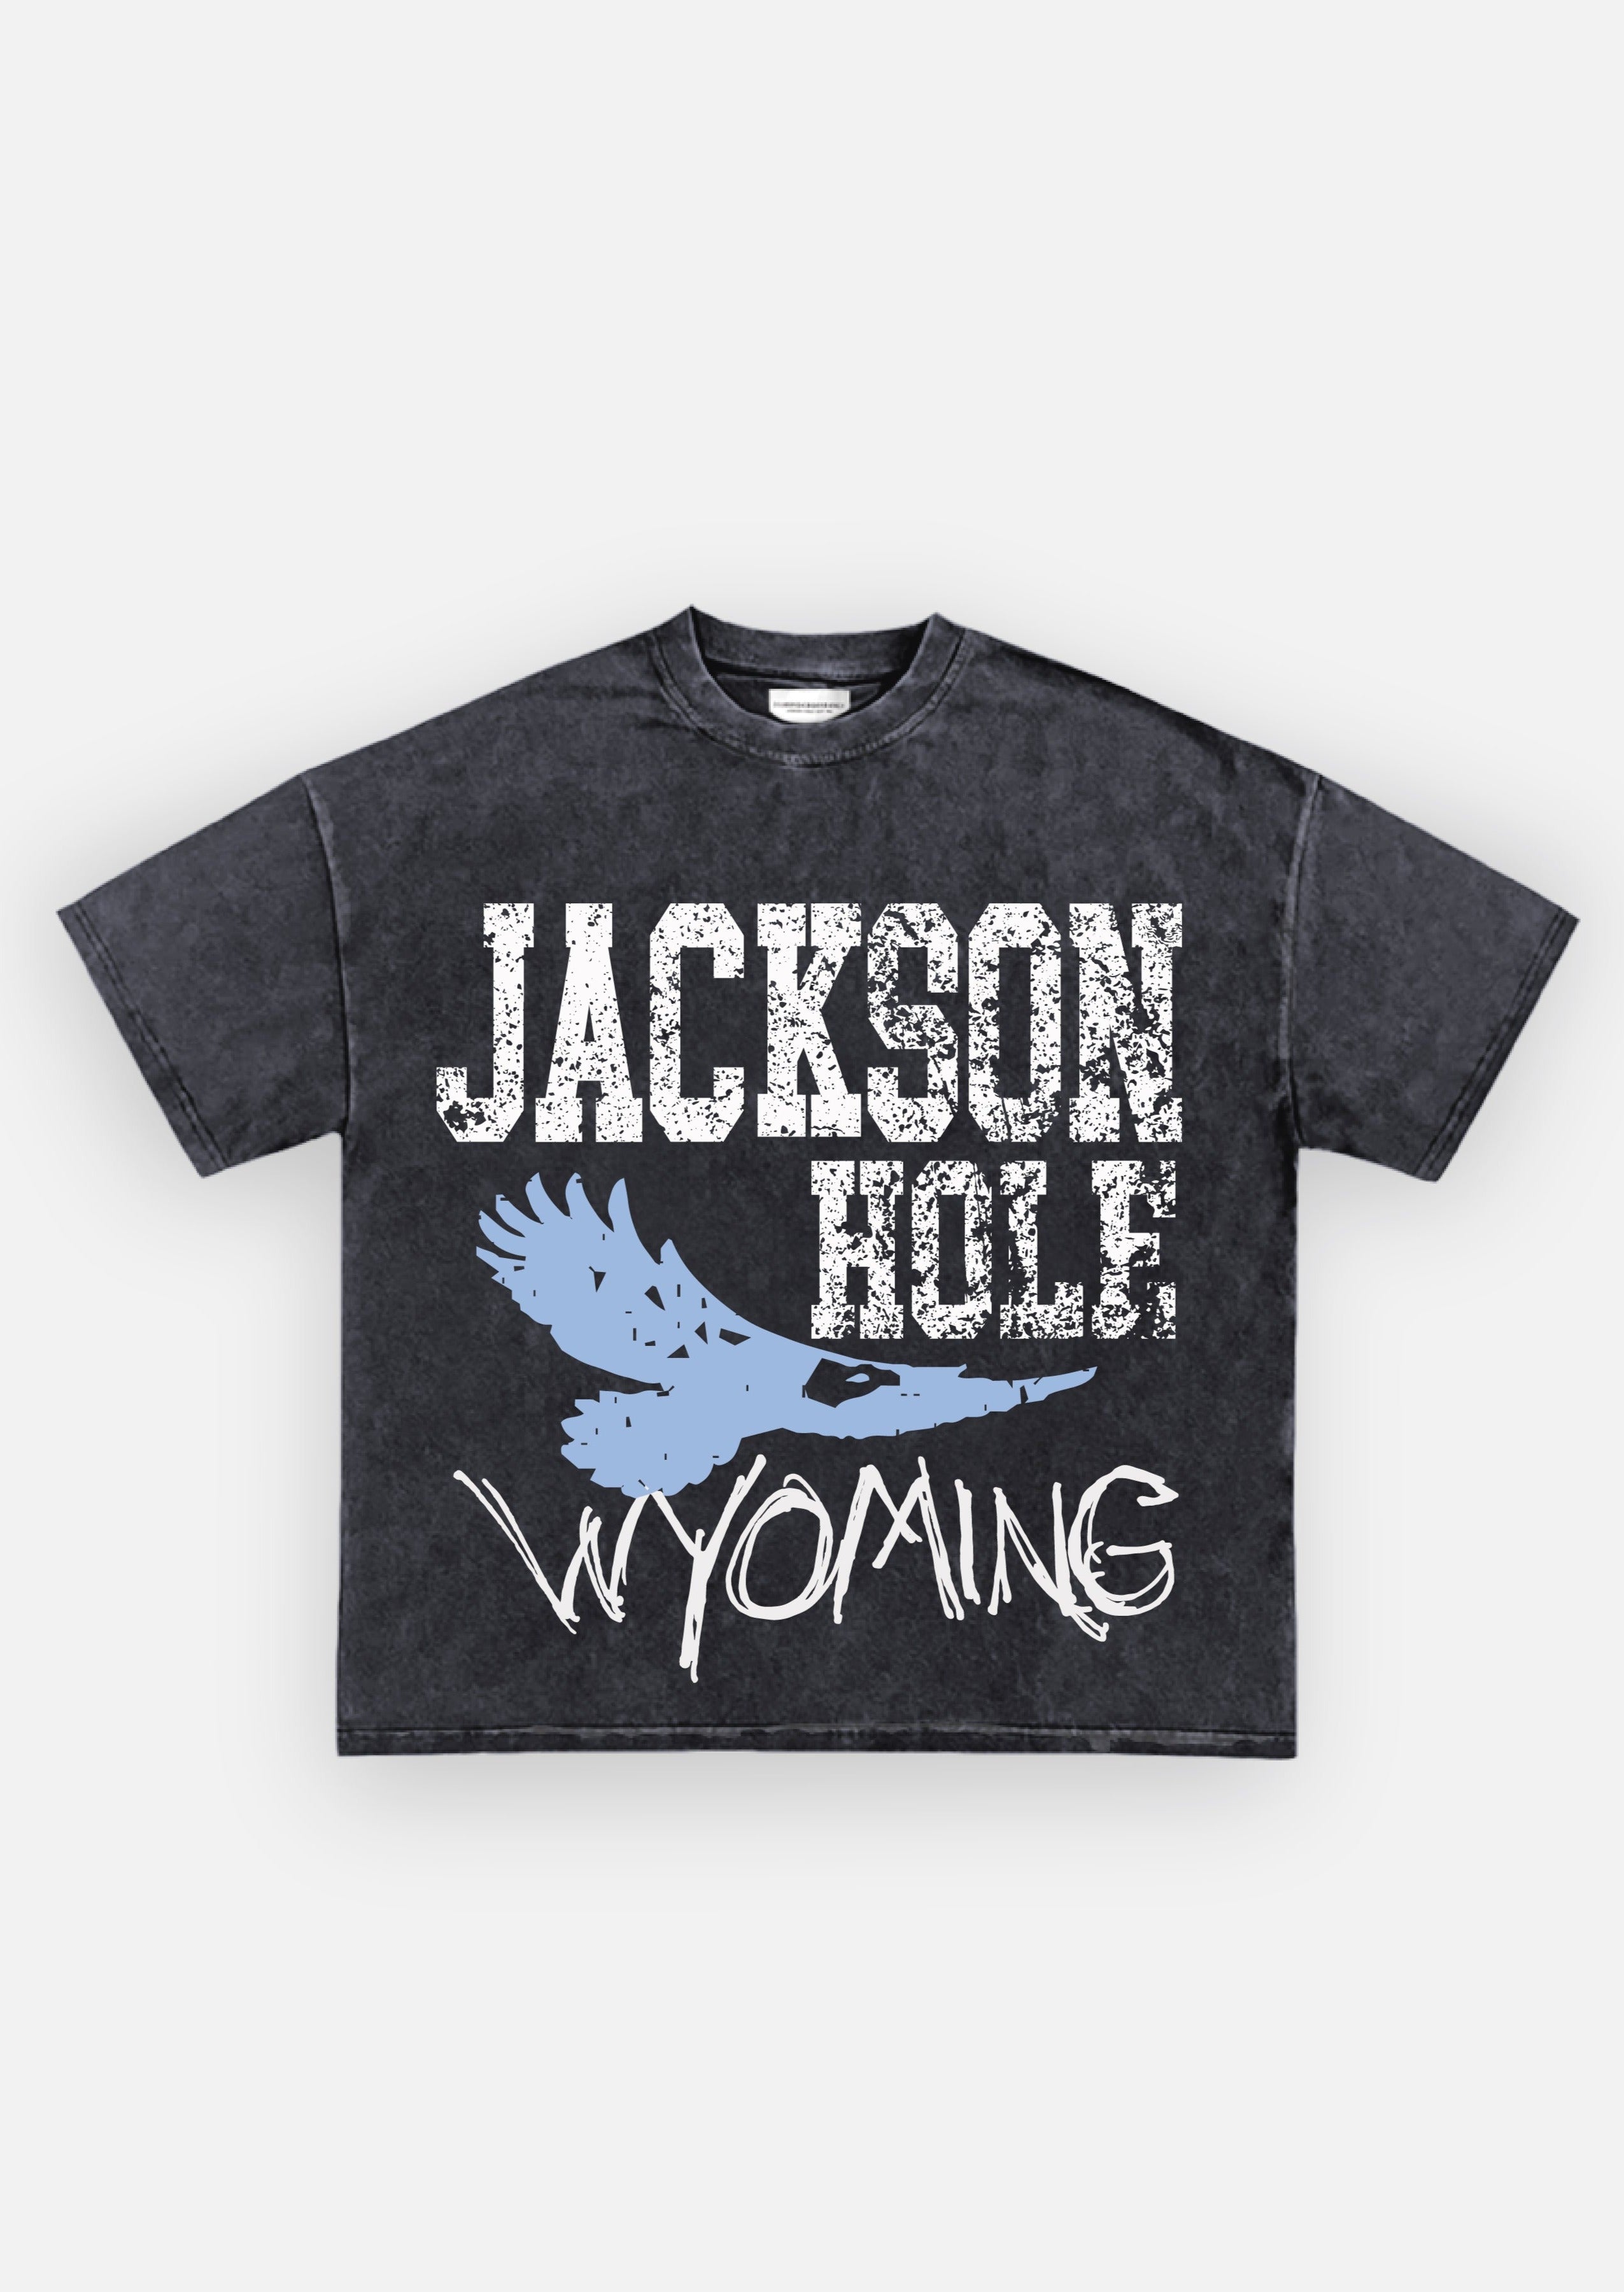 Diamond Cross Ranch JACKSON WILD T-Shirt